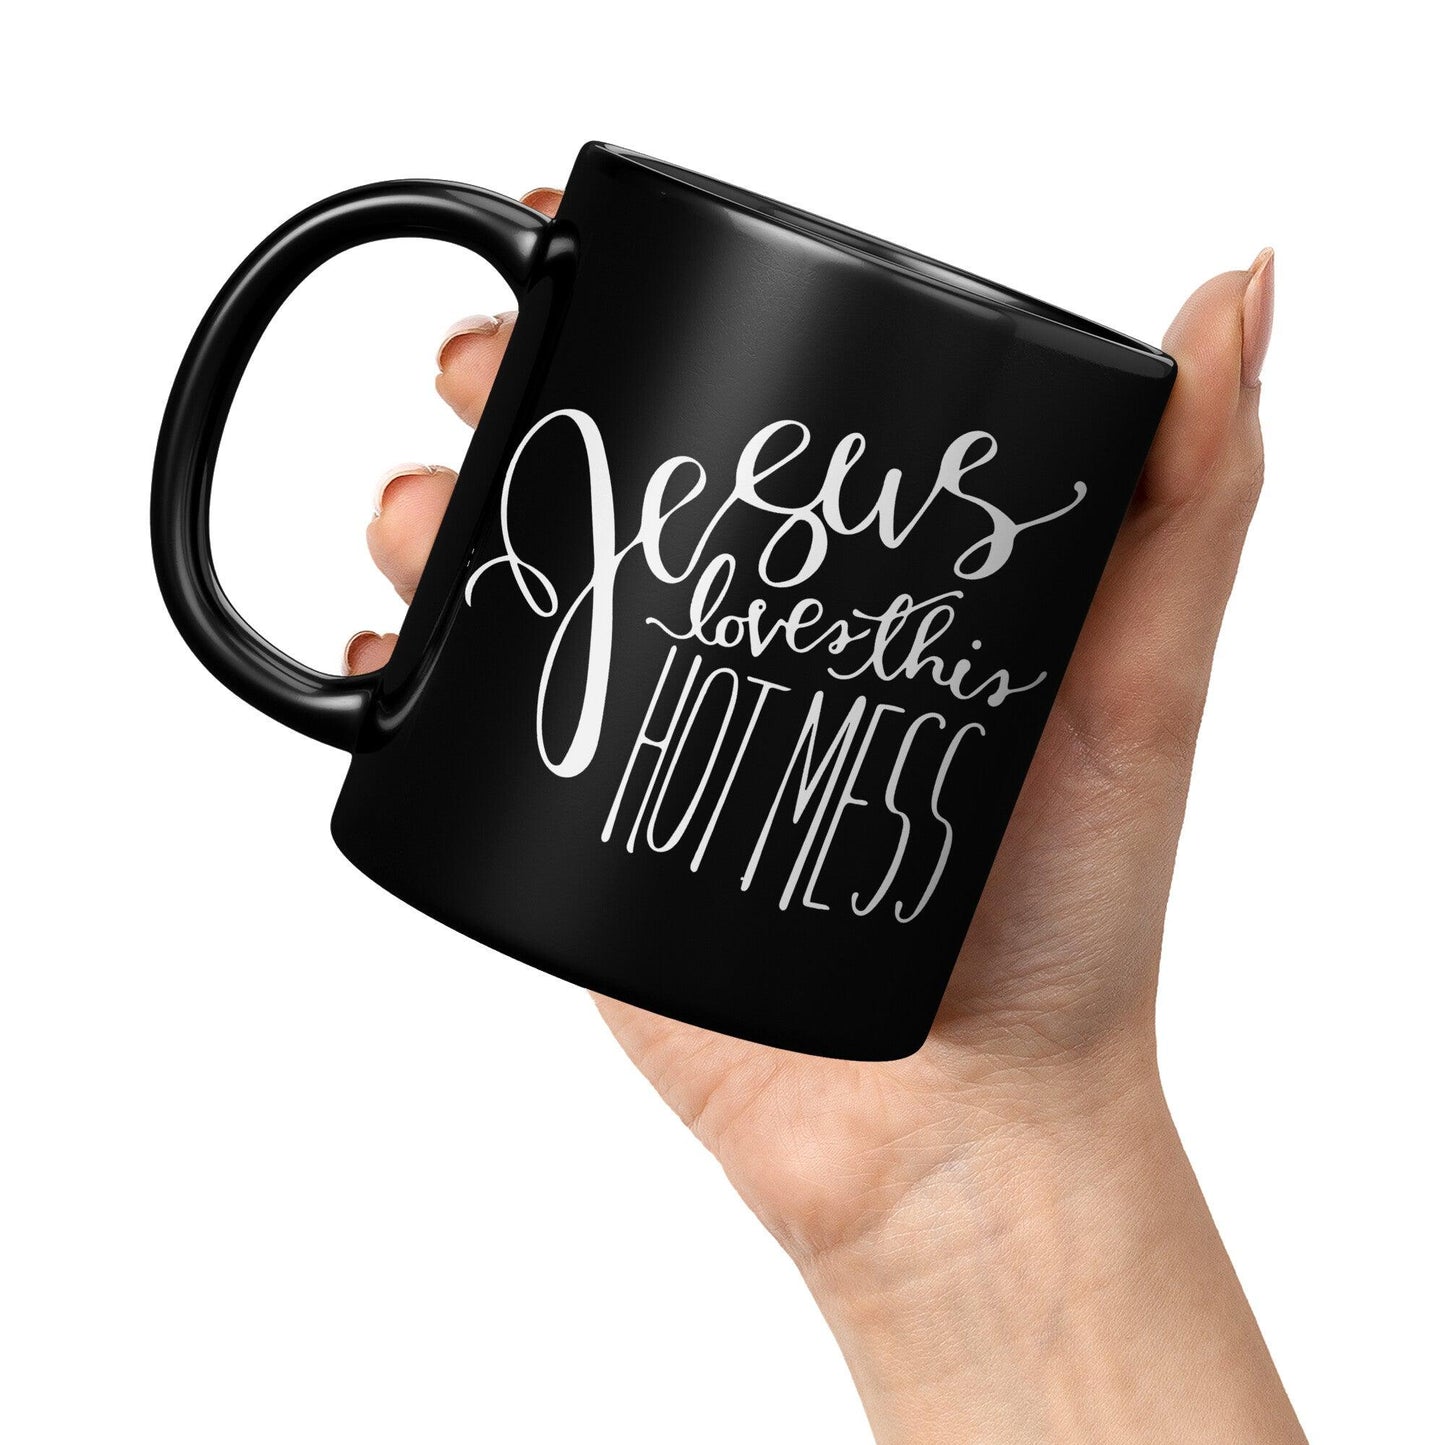 Jesus Loves This Hot Mess Black Mug - TheGivenGet